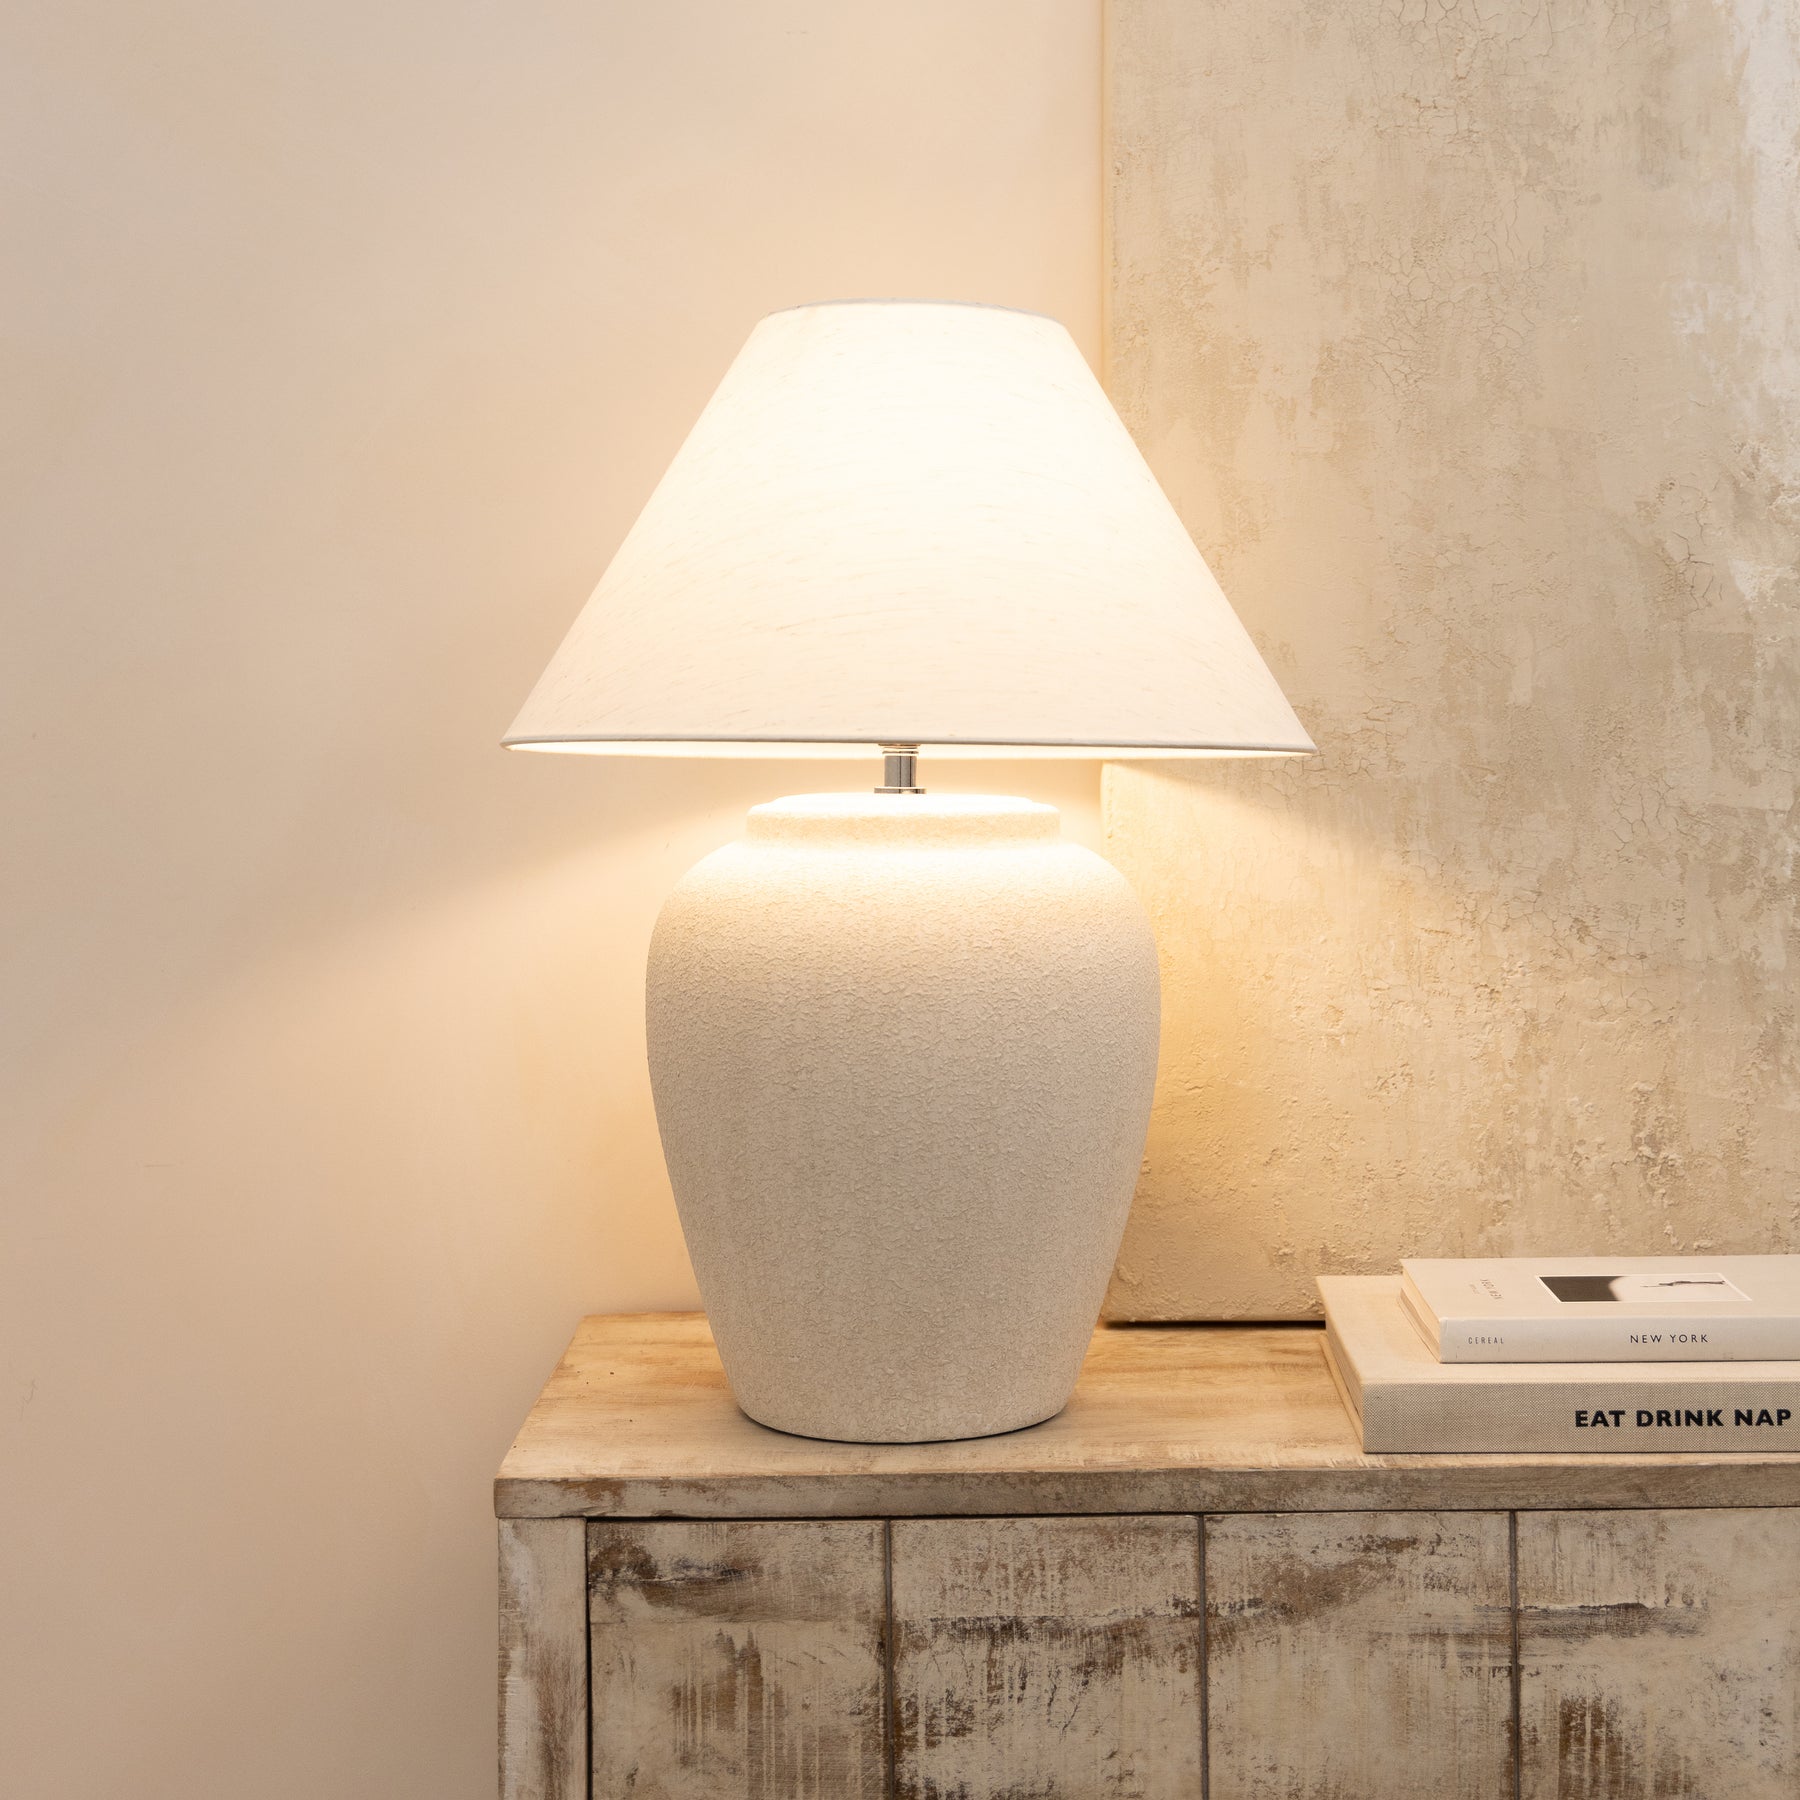 Stone Ceramic Coolie Shade Table Lamp emitting warm light